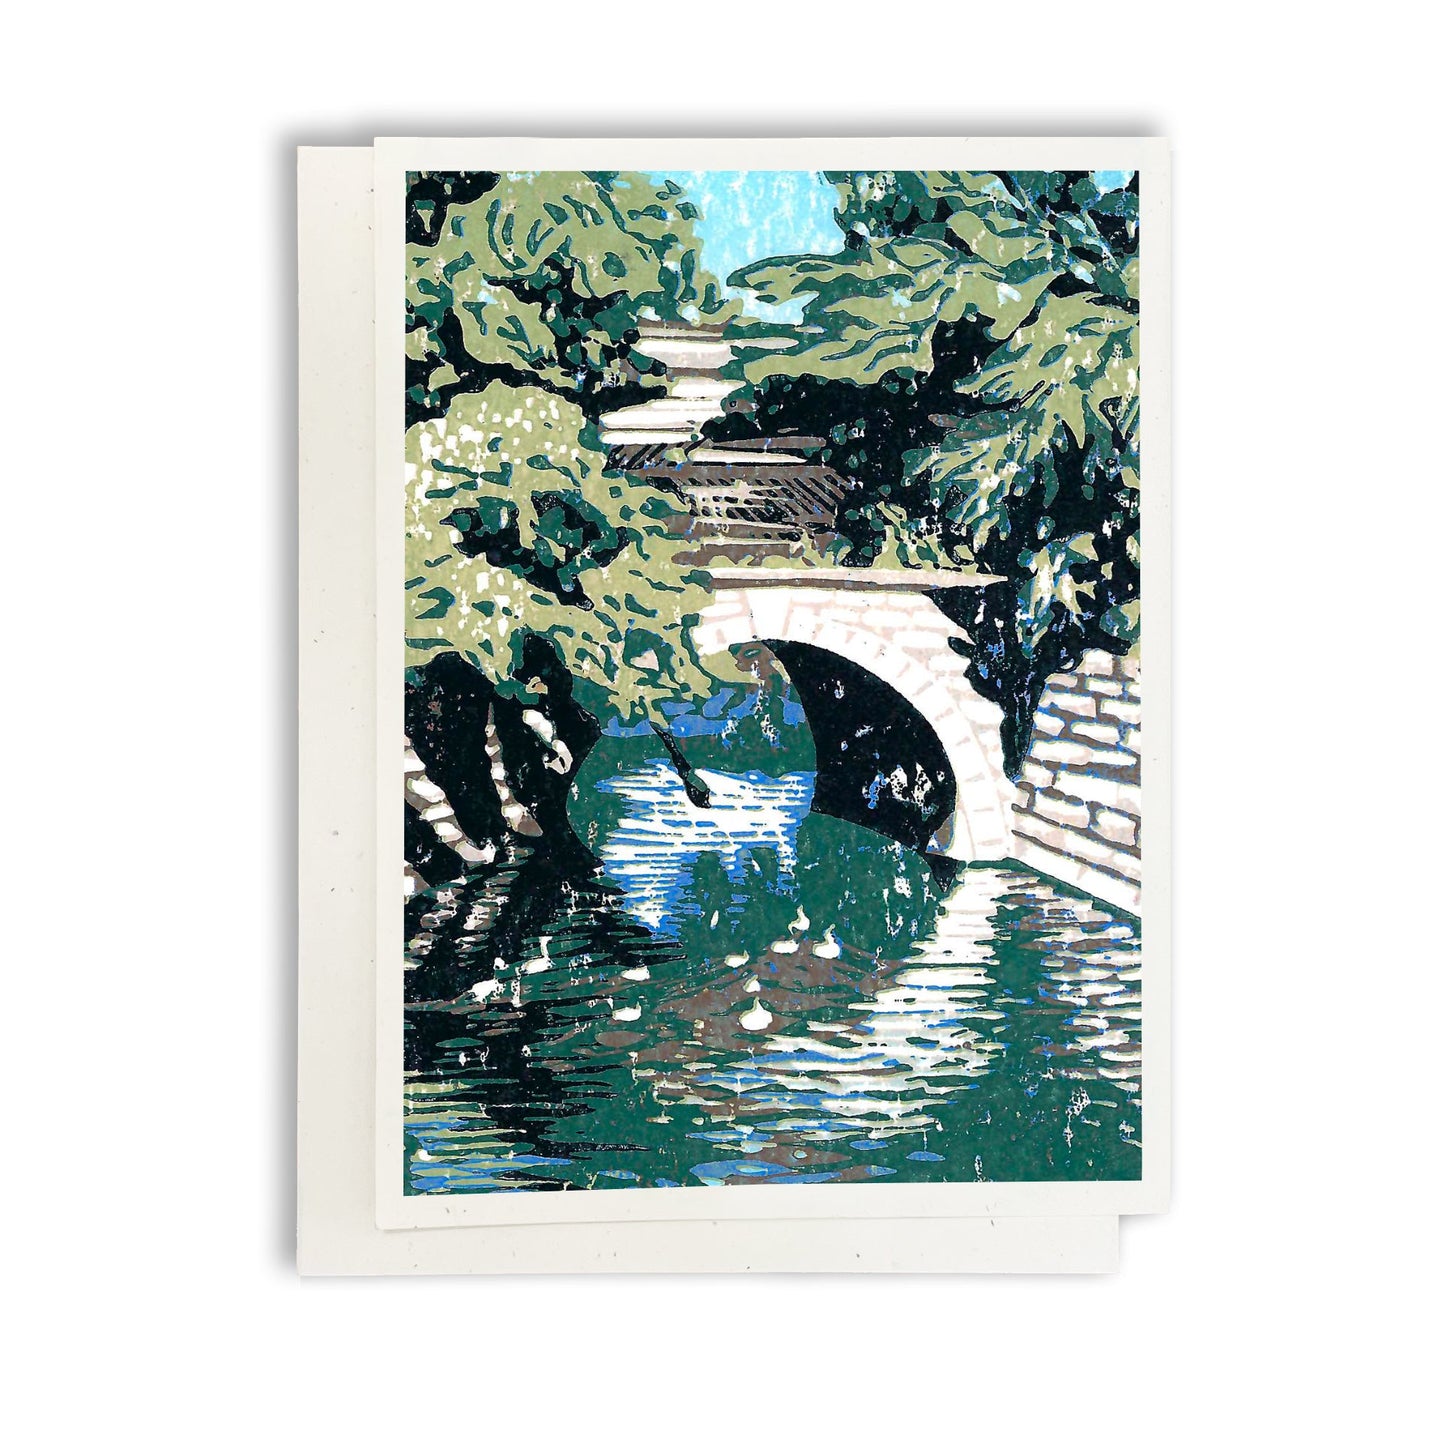 Huron River Bridge greeting card by Natalia Wohletz of Peninsula Prints.